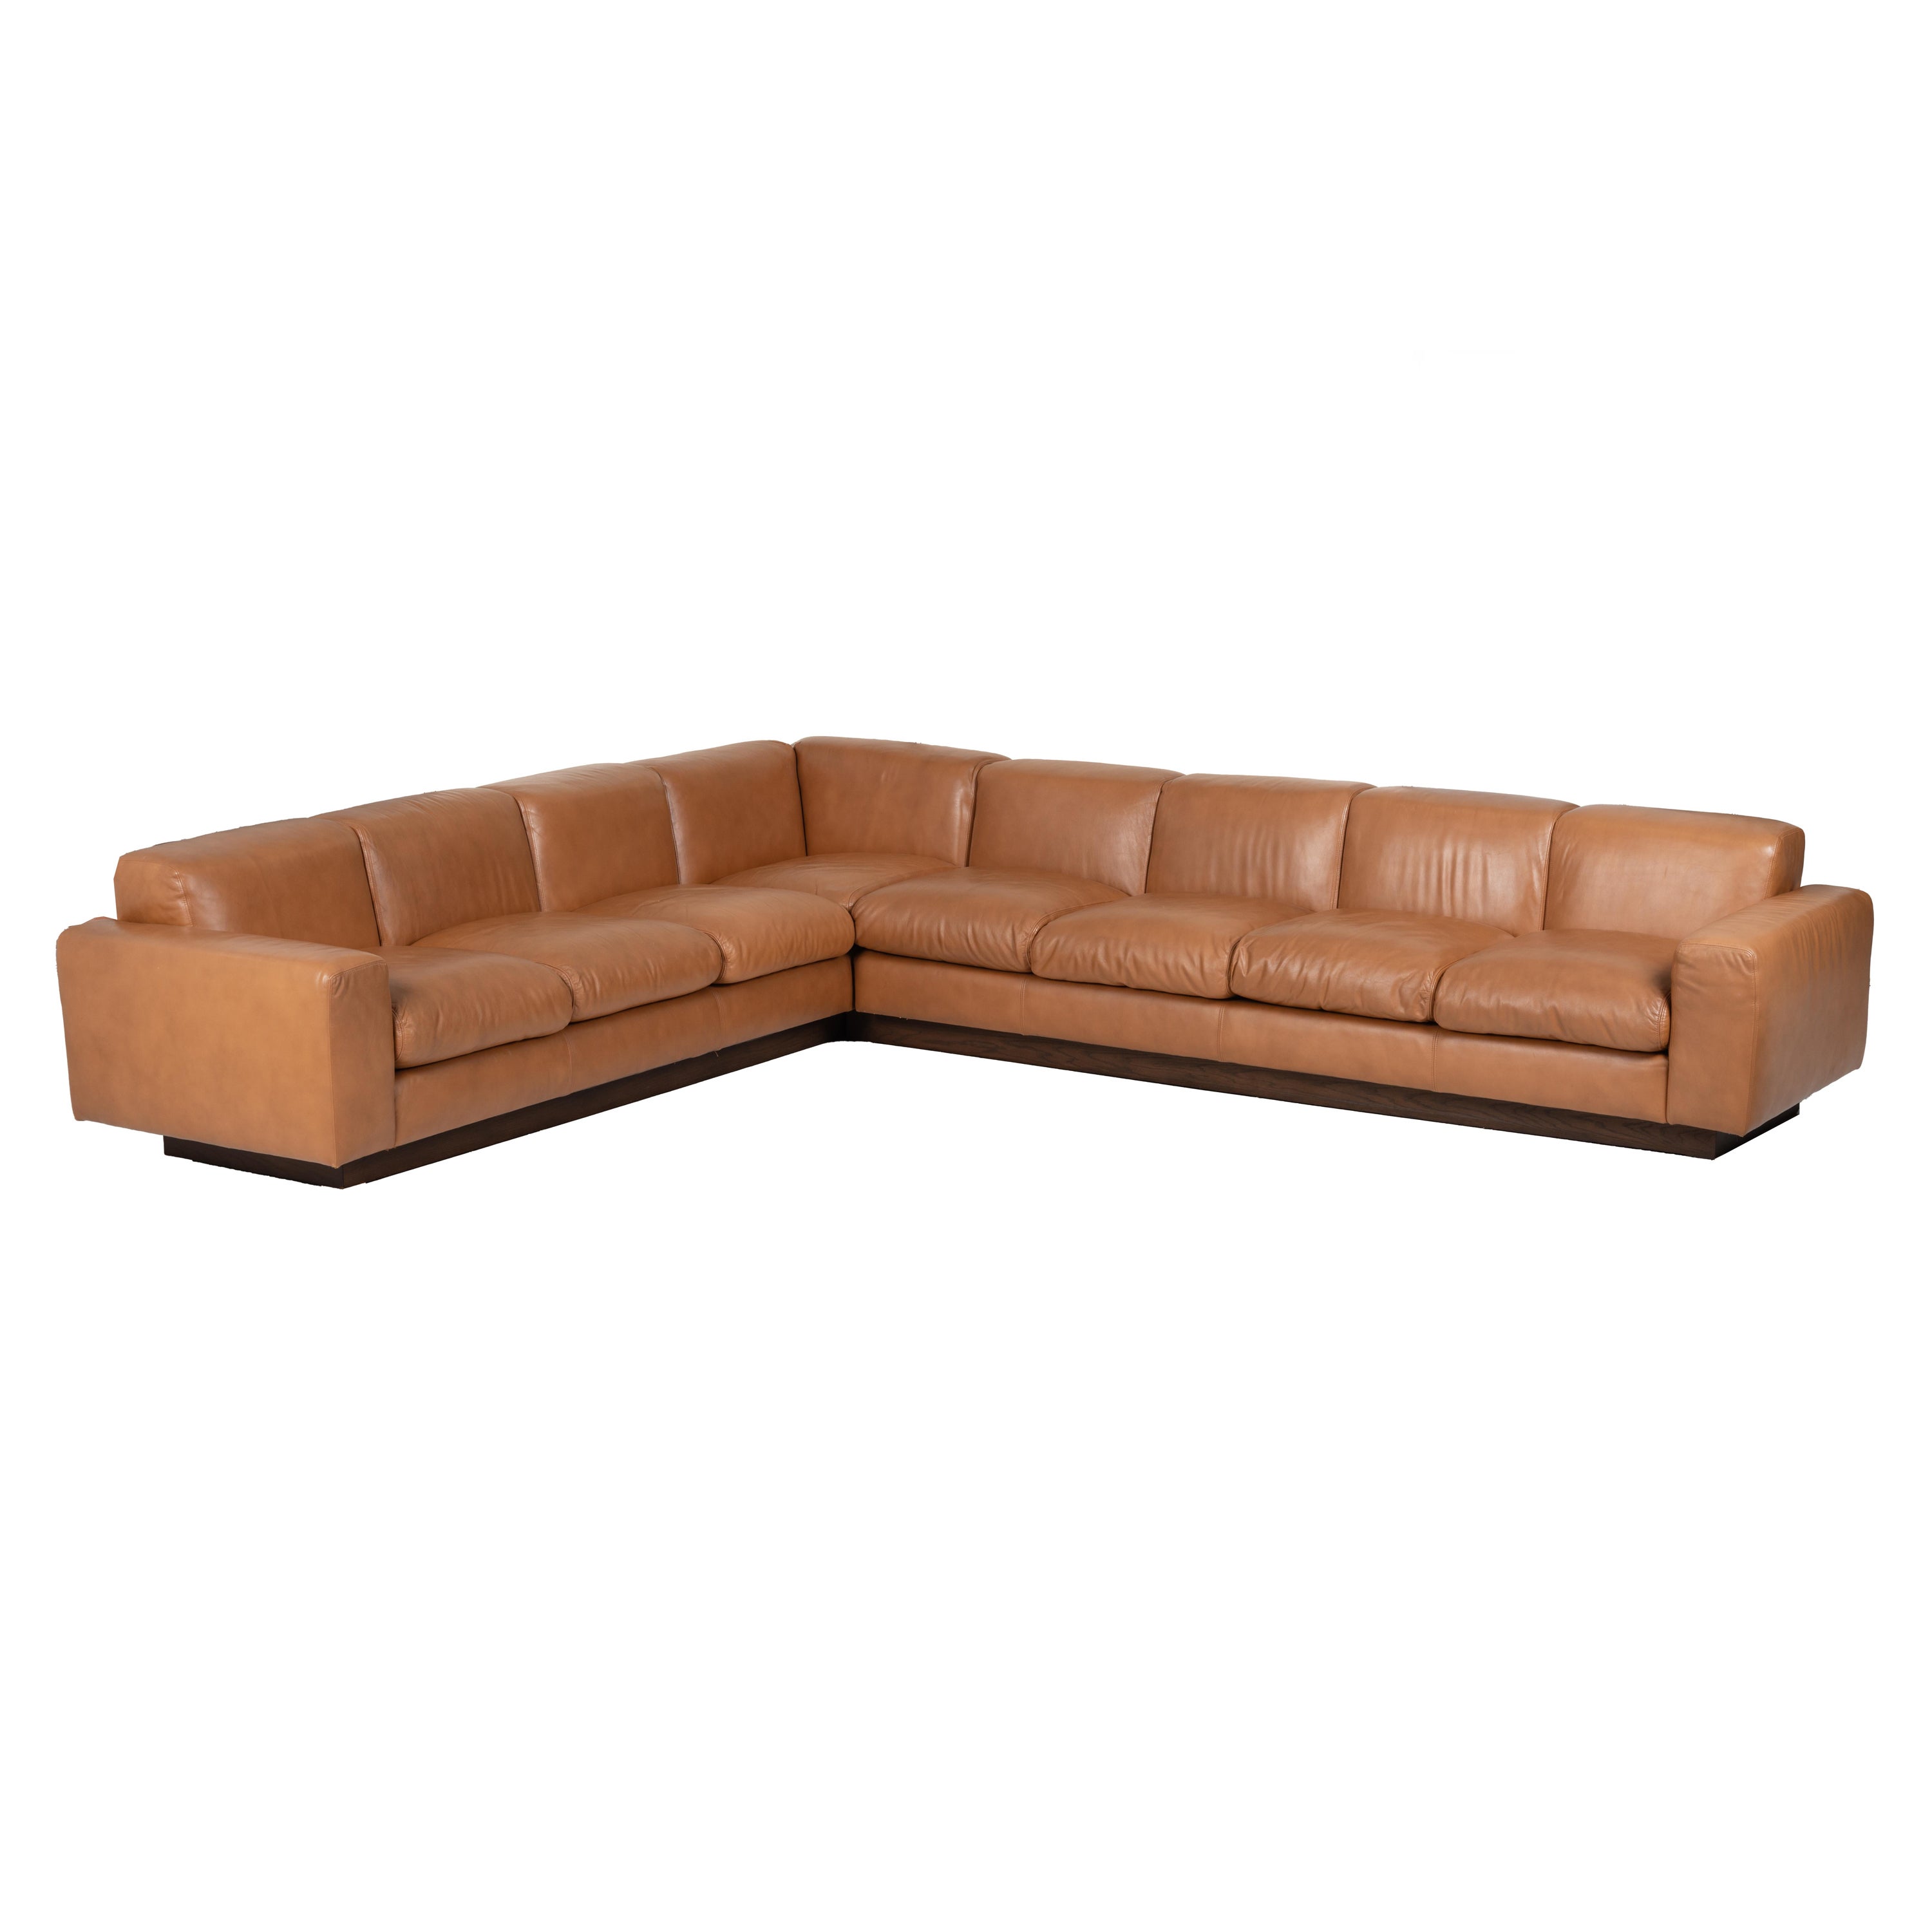 1970's Custom Leather Sectional Sofa